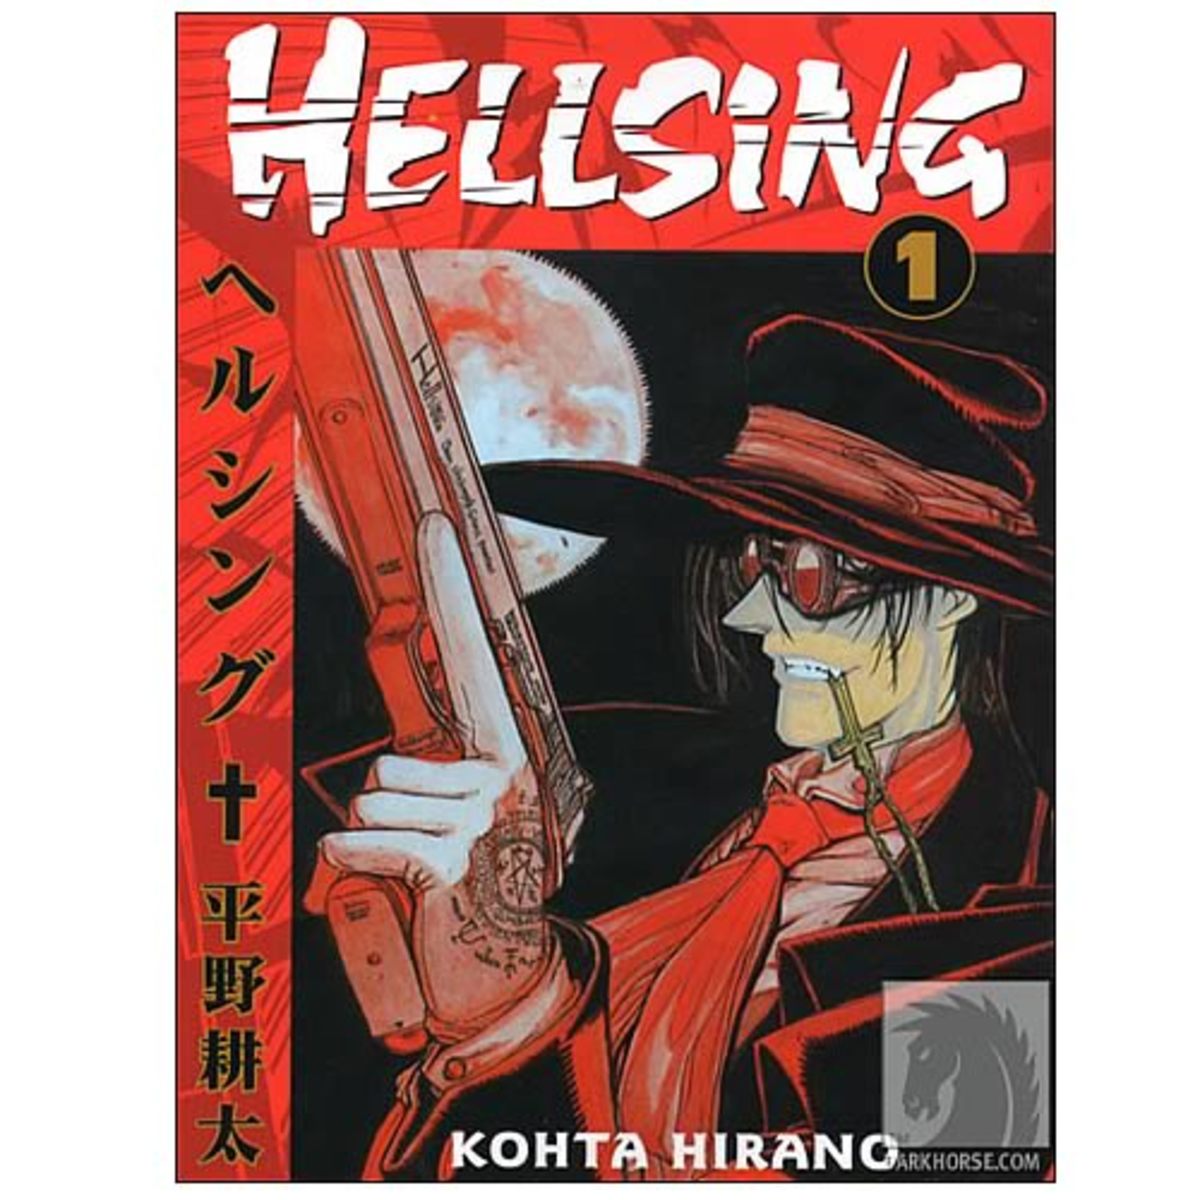 manga-review-hellsing-volume-1-by-kohta-hirano